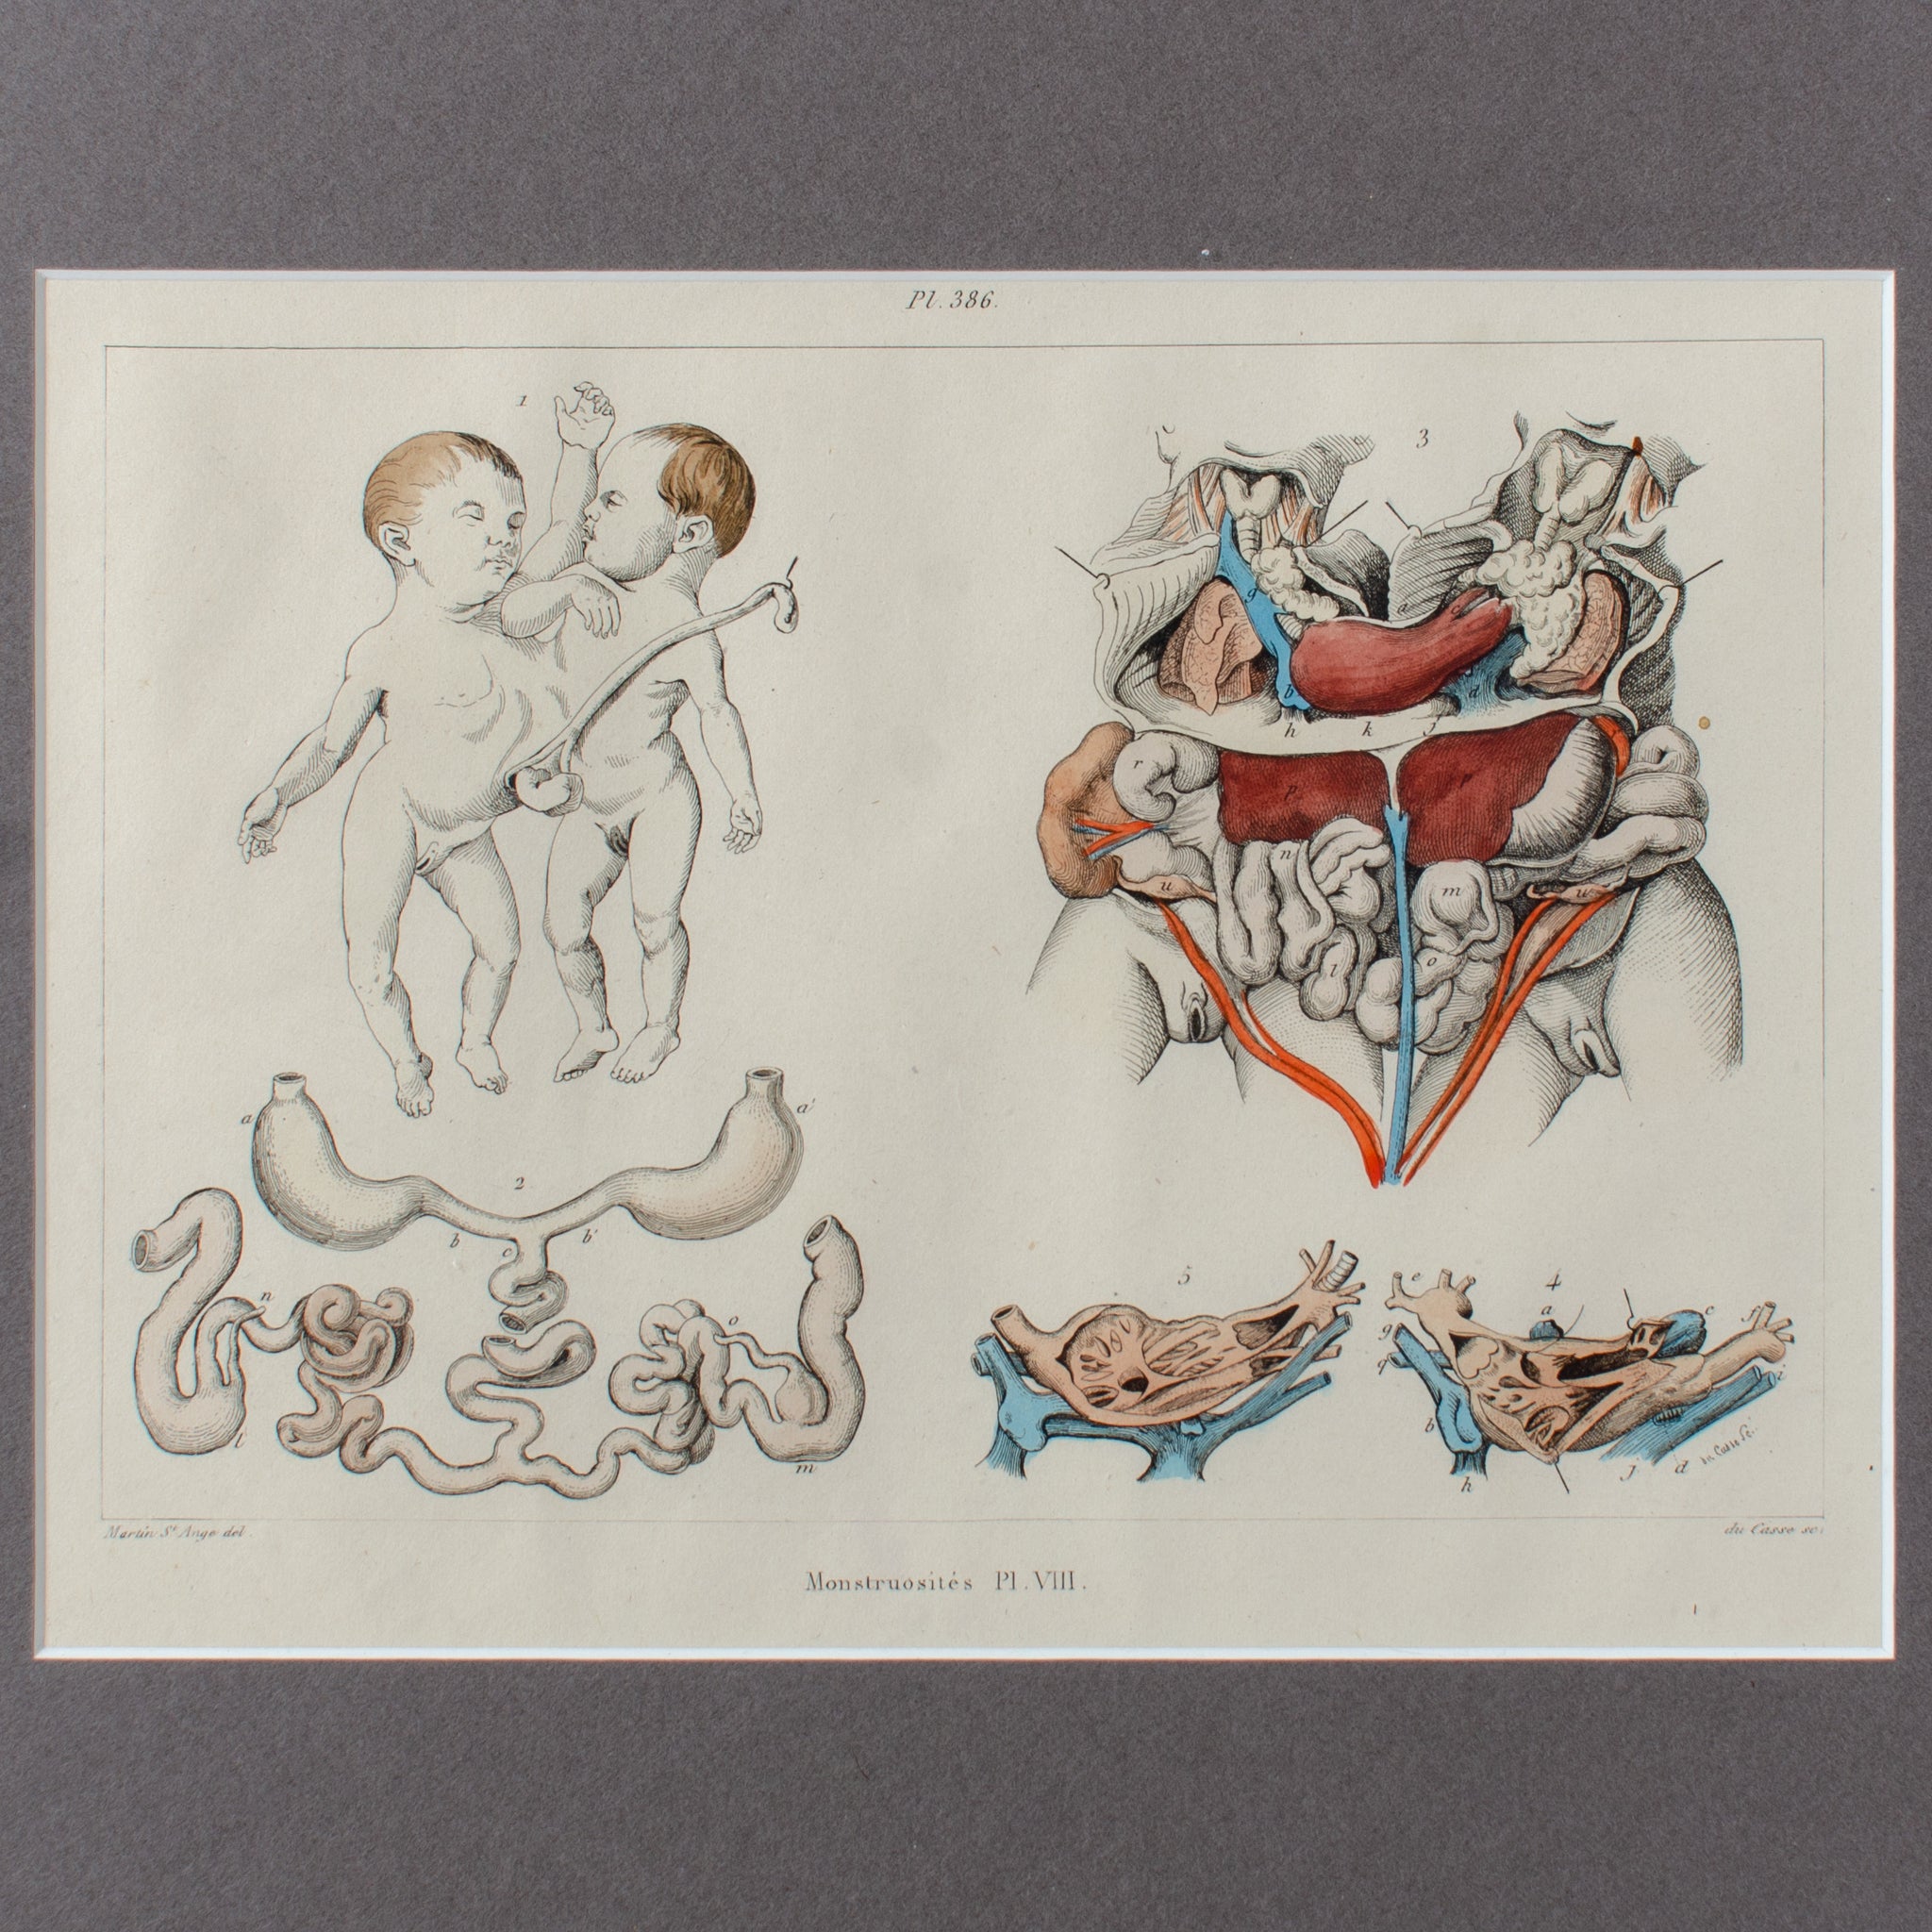 Monstruosites, Engravings from Isidore Geoffrey Sainte-Hilaire, Paris c. 1832